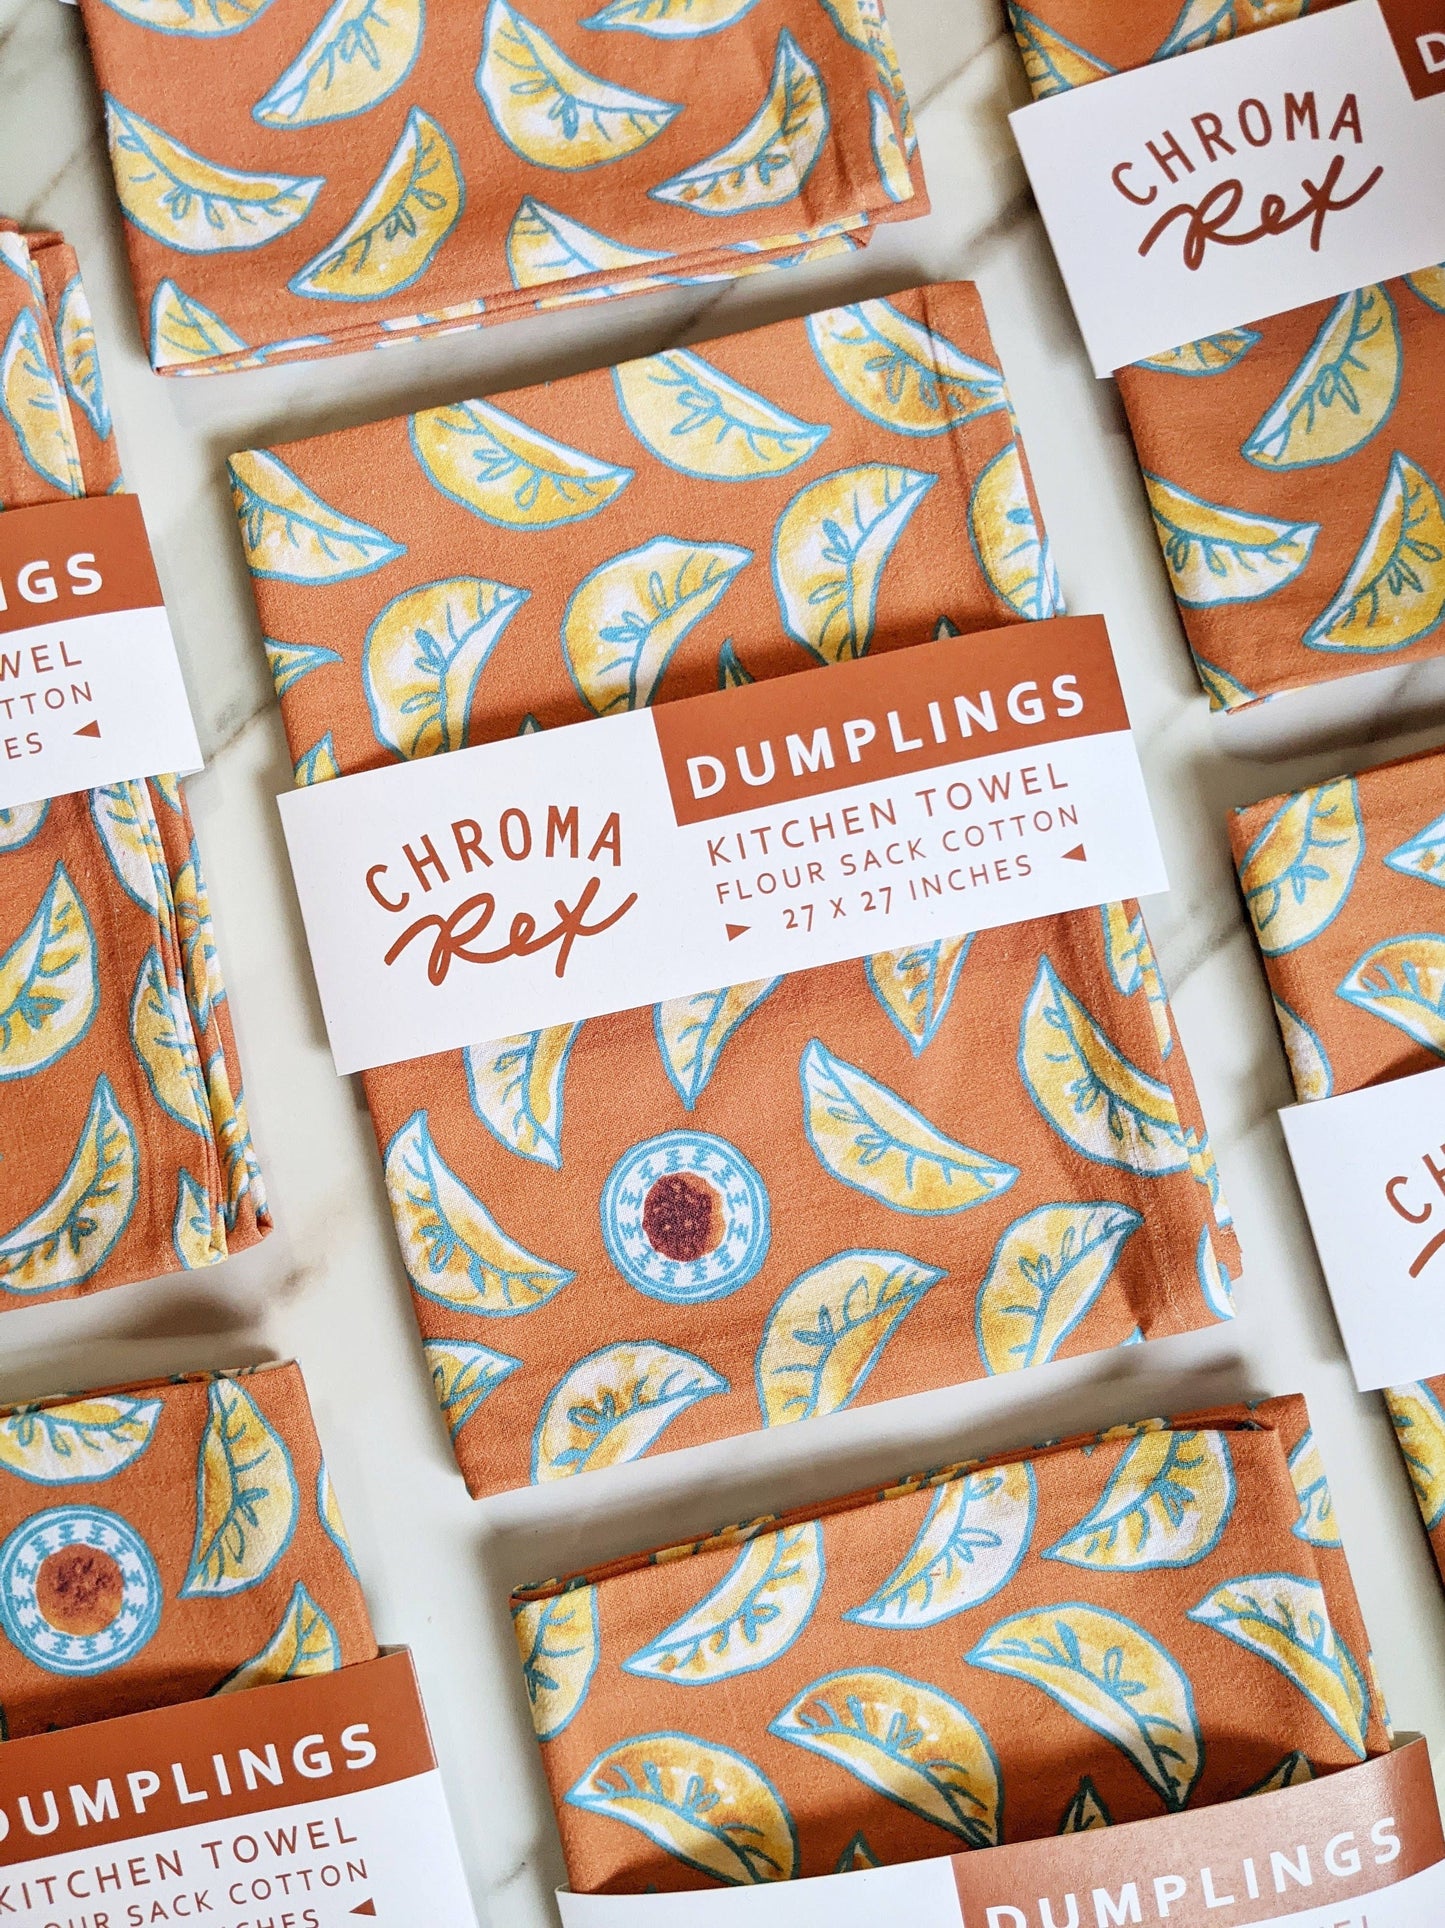 Chroma Rex - Dumplings Kitchen Towel